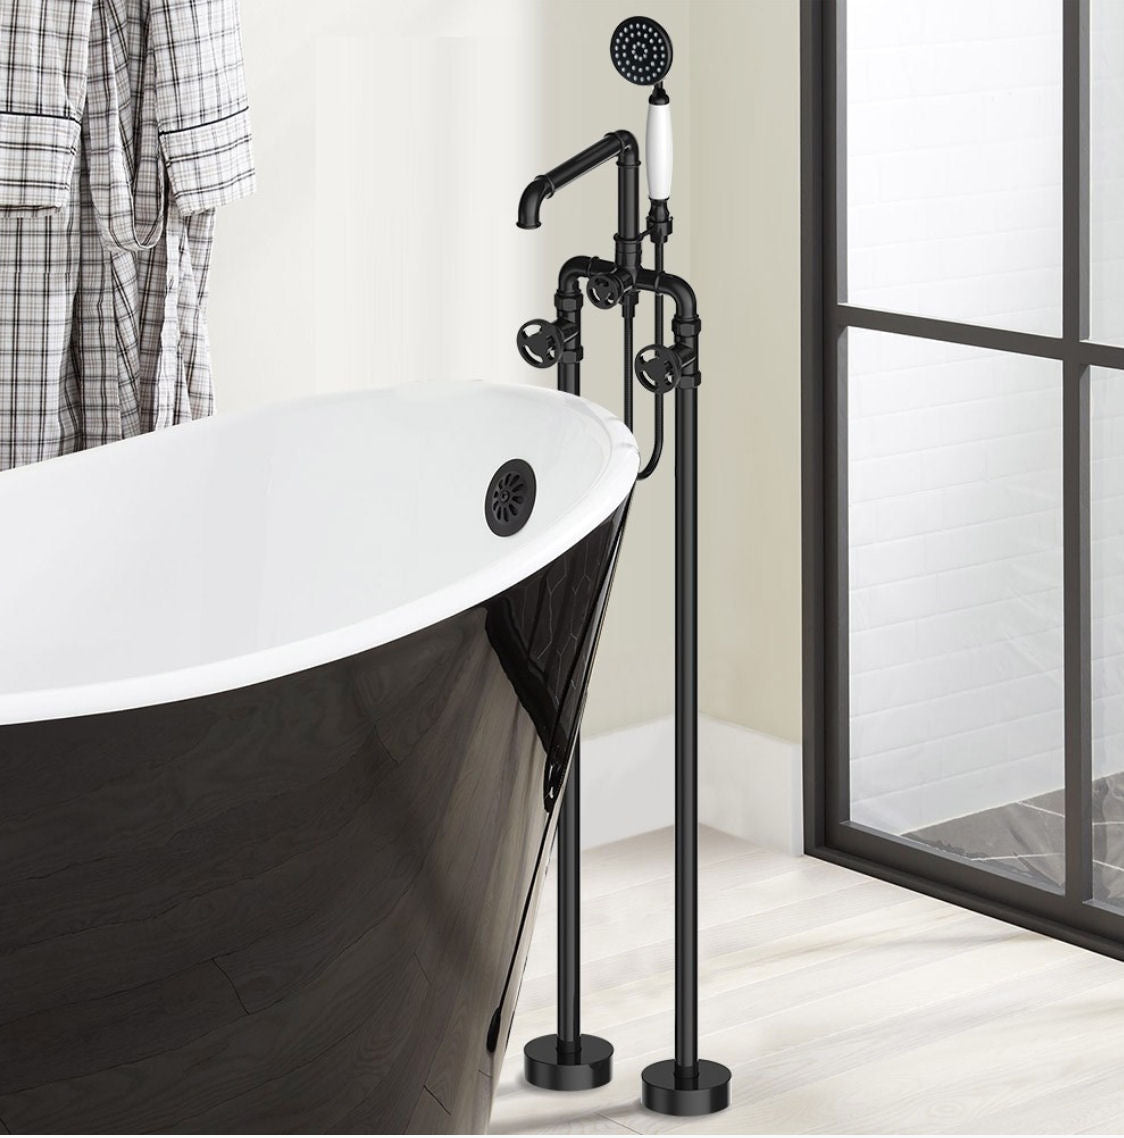 Freestanding Black Matte Industrial Bathtub Faucet - |VESIMI Design| Luxury and Rustic bathrooms online